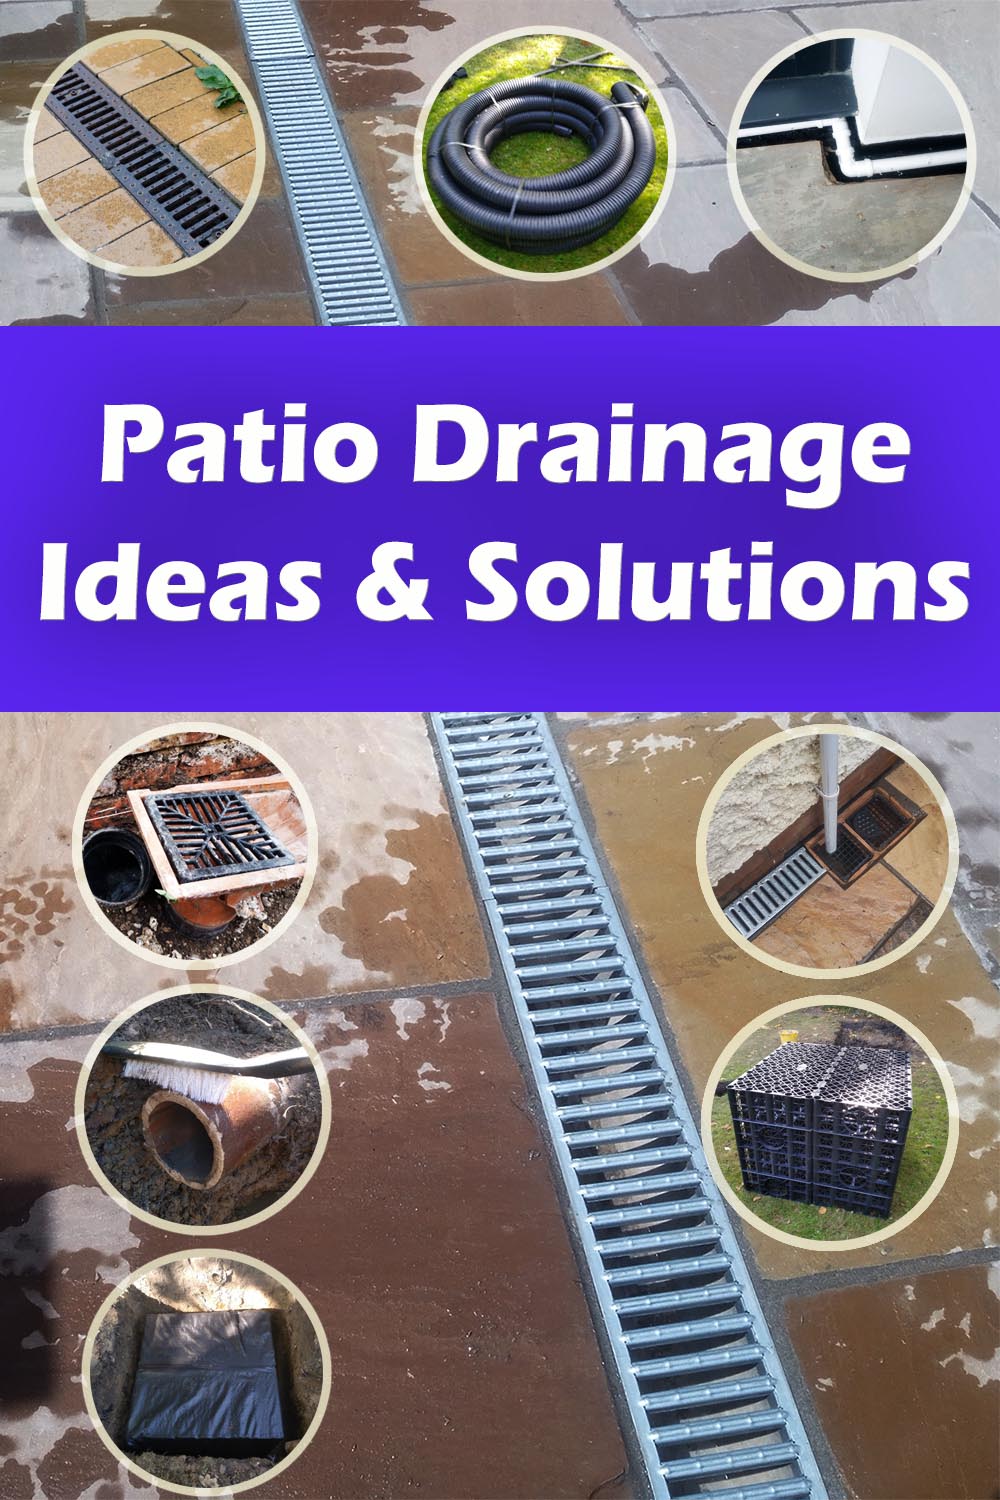 Patio drainage